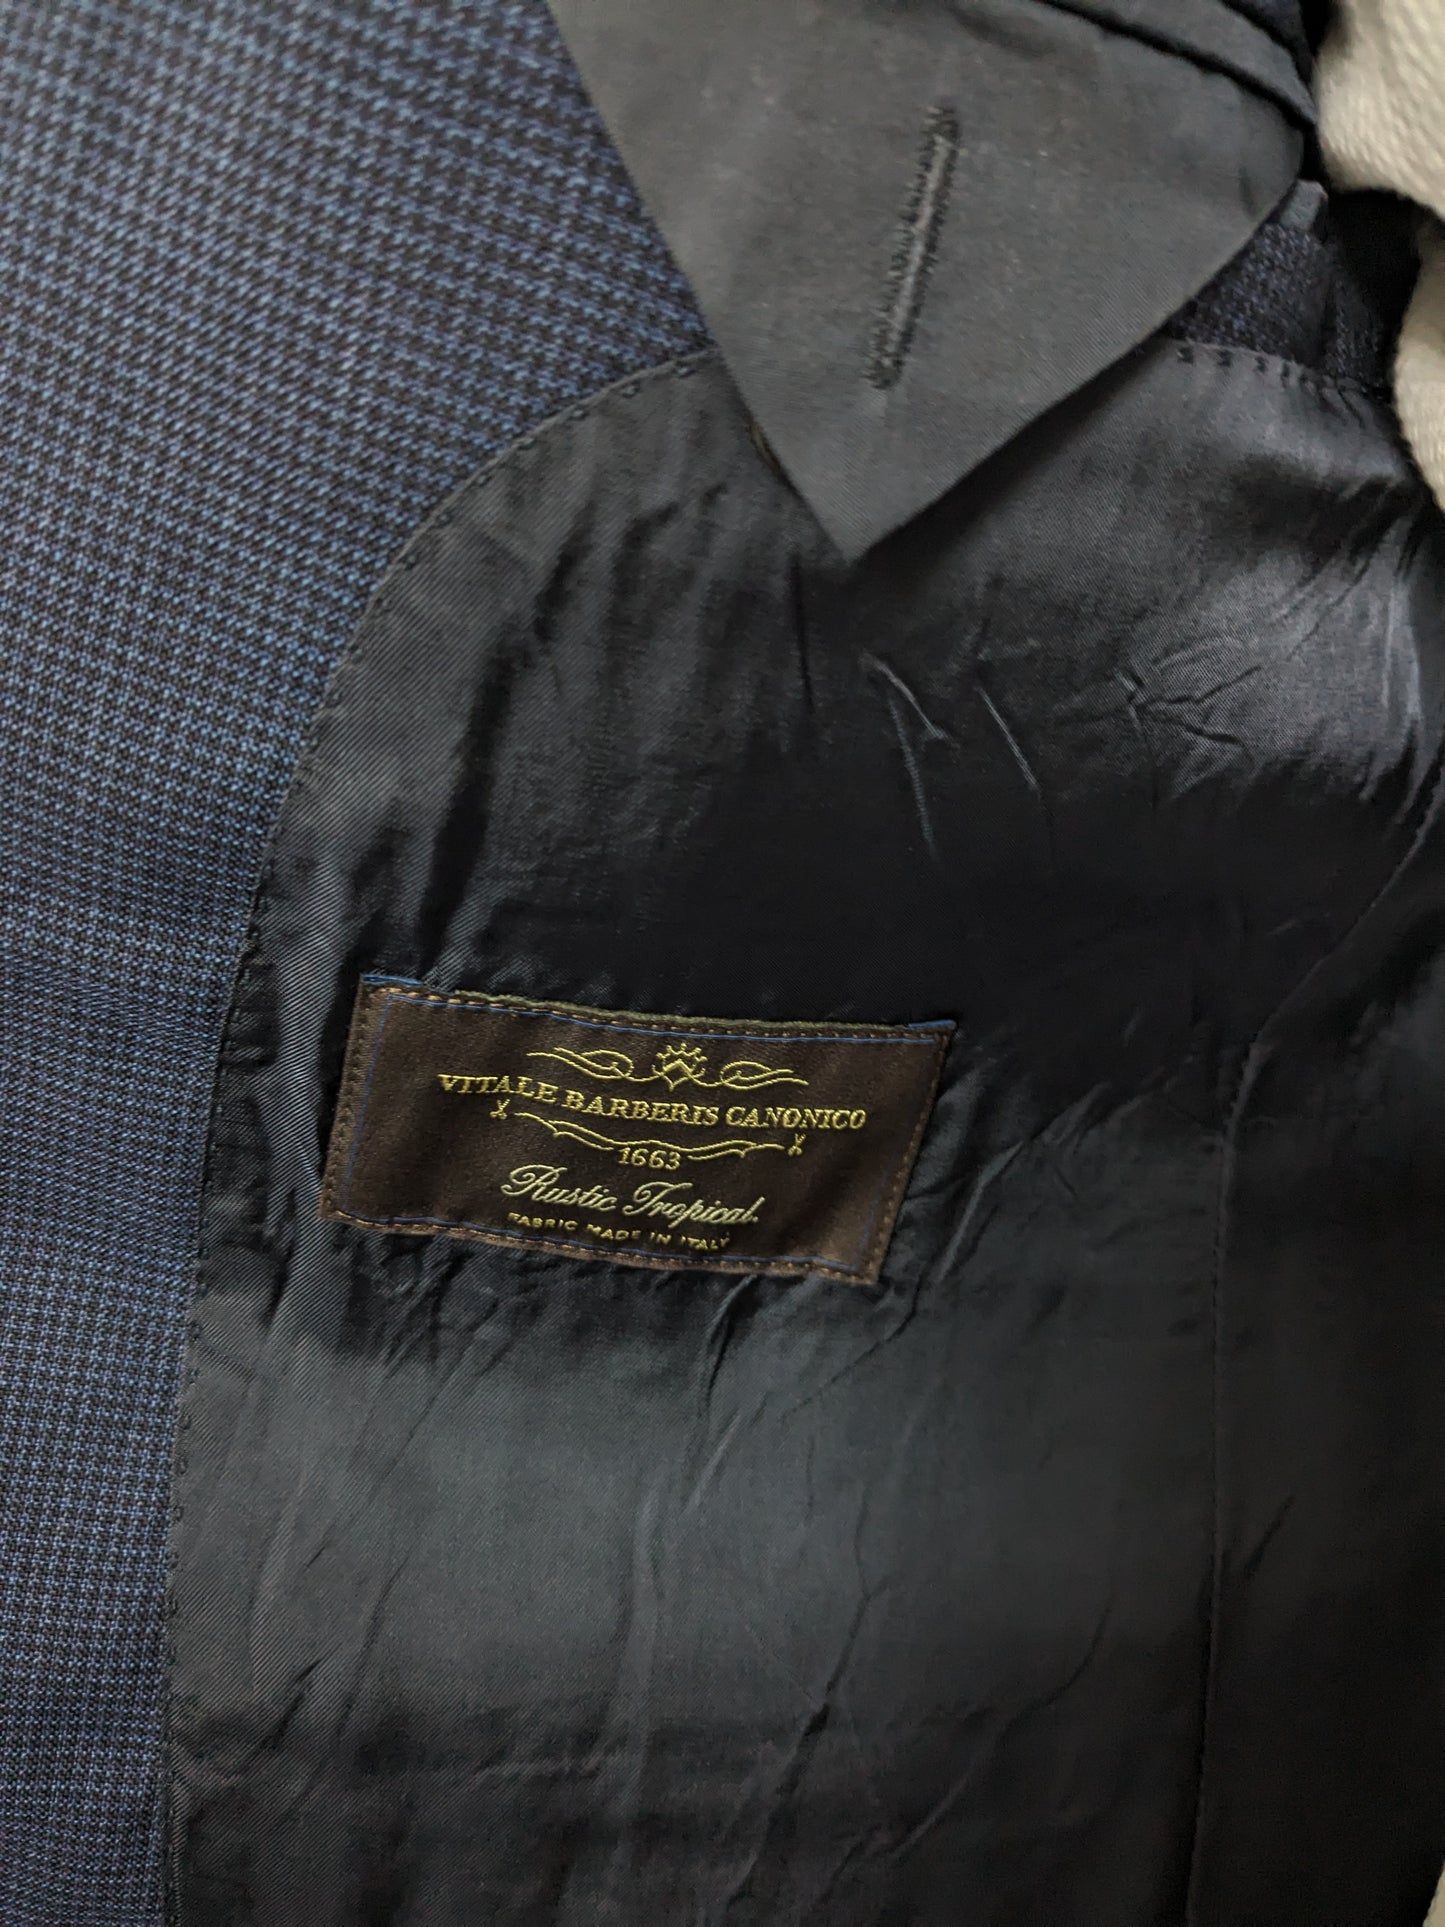 Suitsupply woolen jacket. Blue black motif. Size 48 / M.